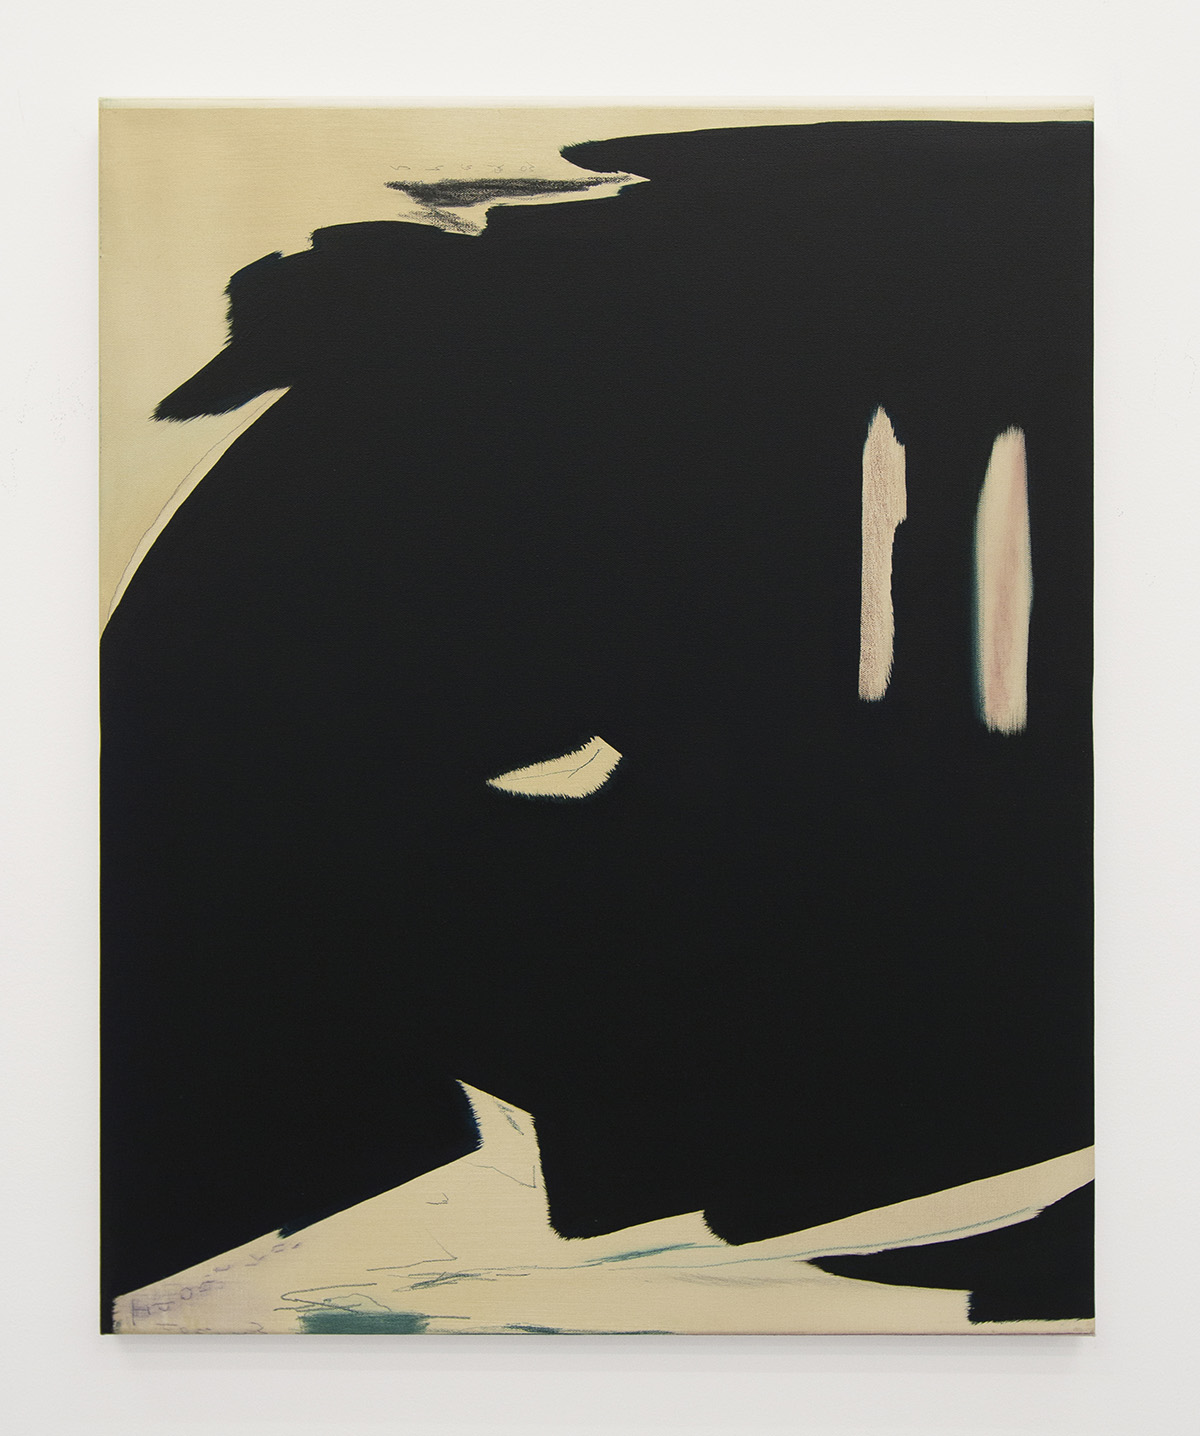 ​Shi Jiayun, Black #3, 2018, oil on canvas, 76.2 x 60.9 cm, 30 x 24 in.​